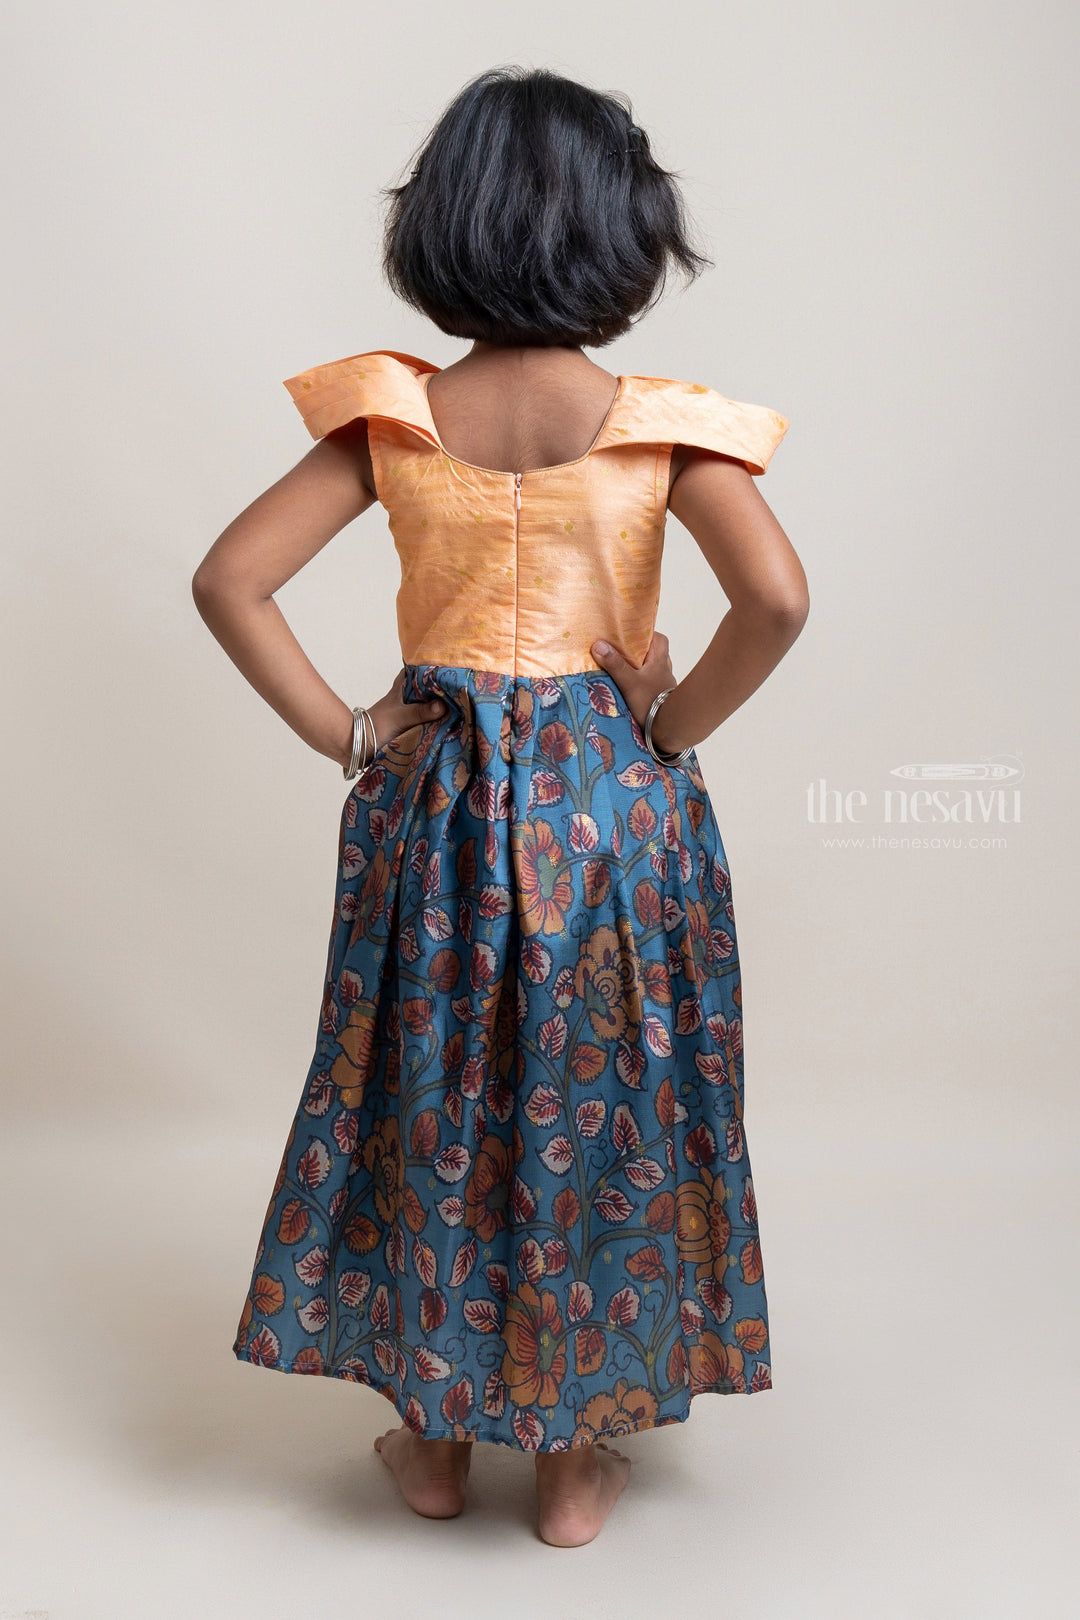 The Nesavu Silk Gown Kalahasti Kalamkari Inspired Designer Kalamkari Anarkali For Kids Nesavu Explore our range of Cotton Anarkali dresses for baby girls | The Nesavu